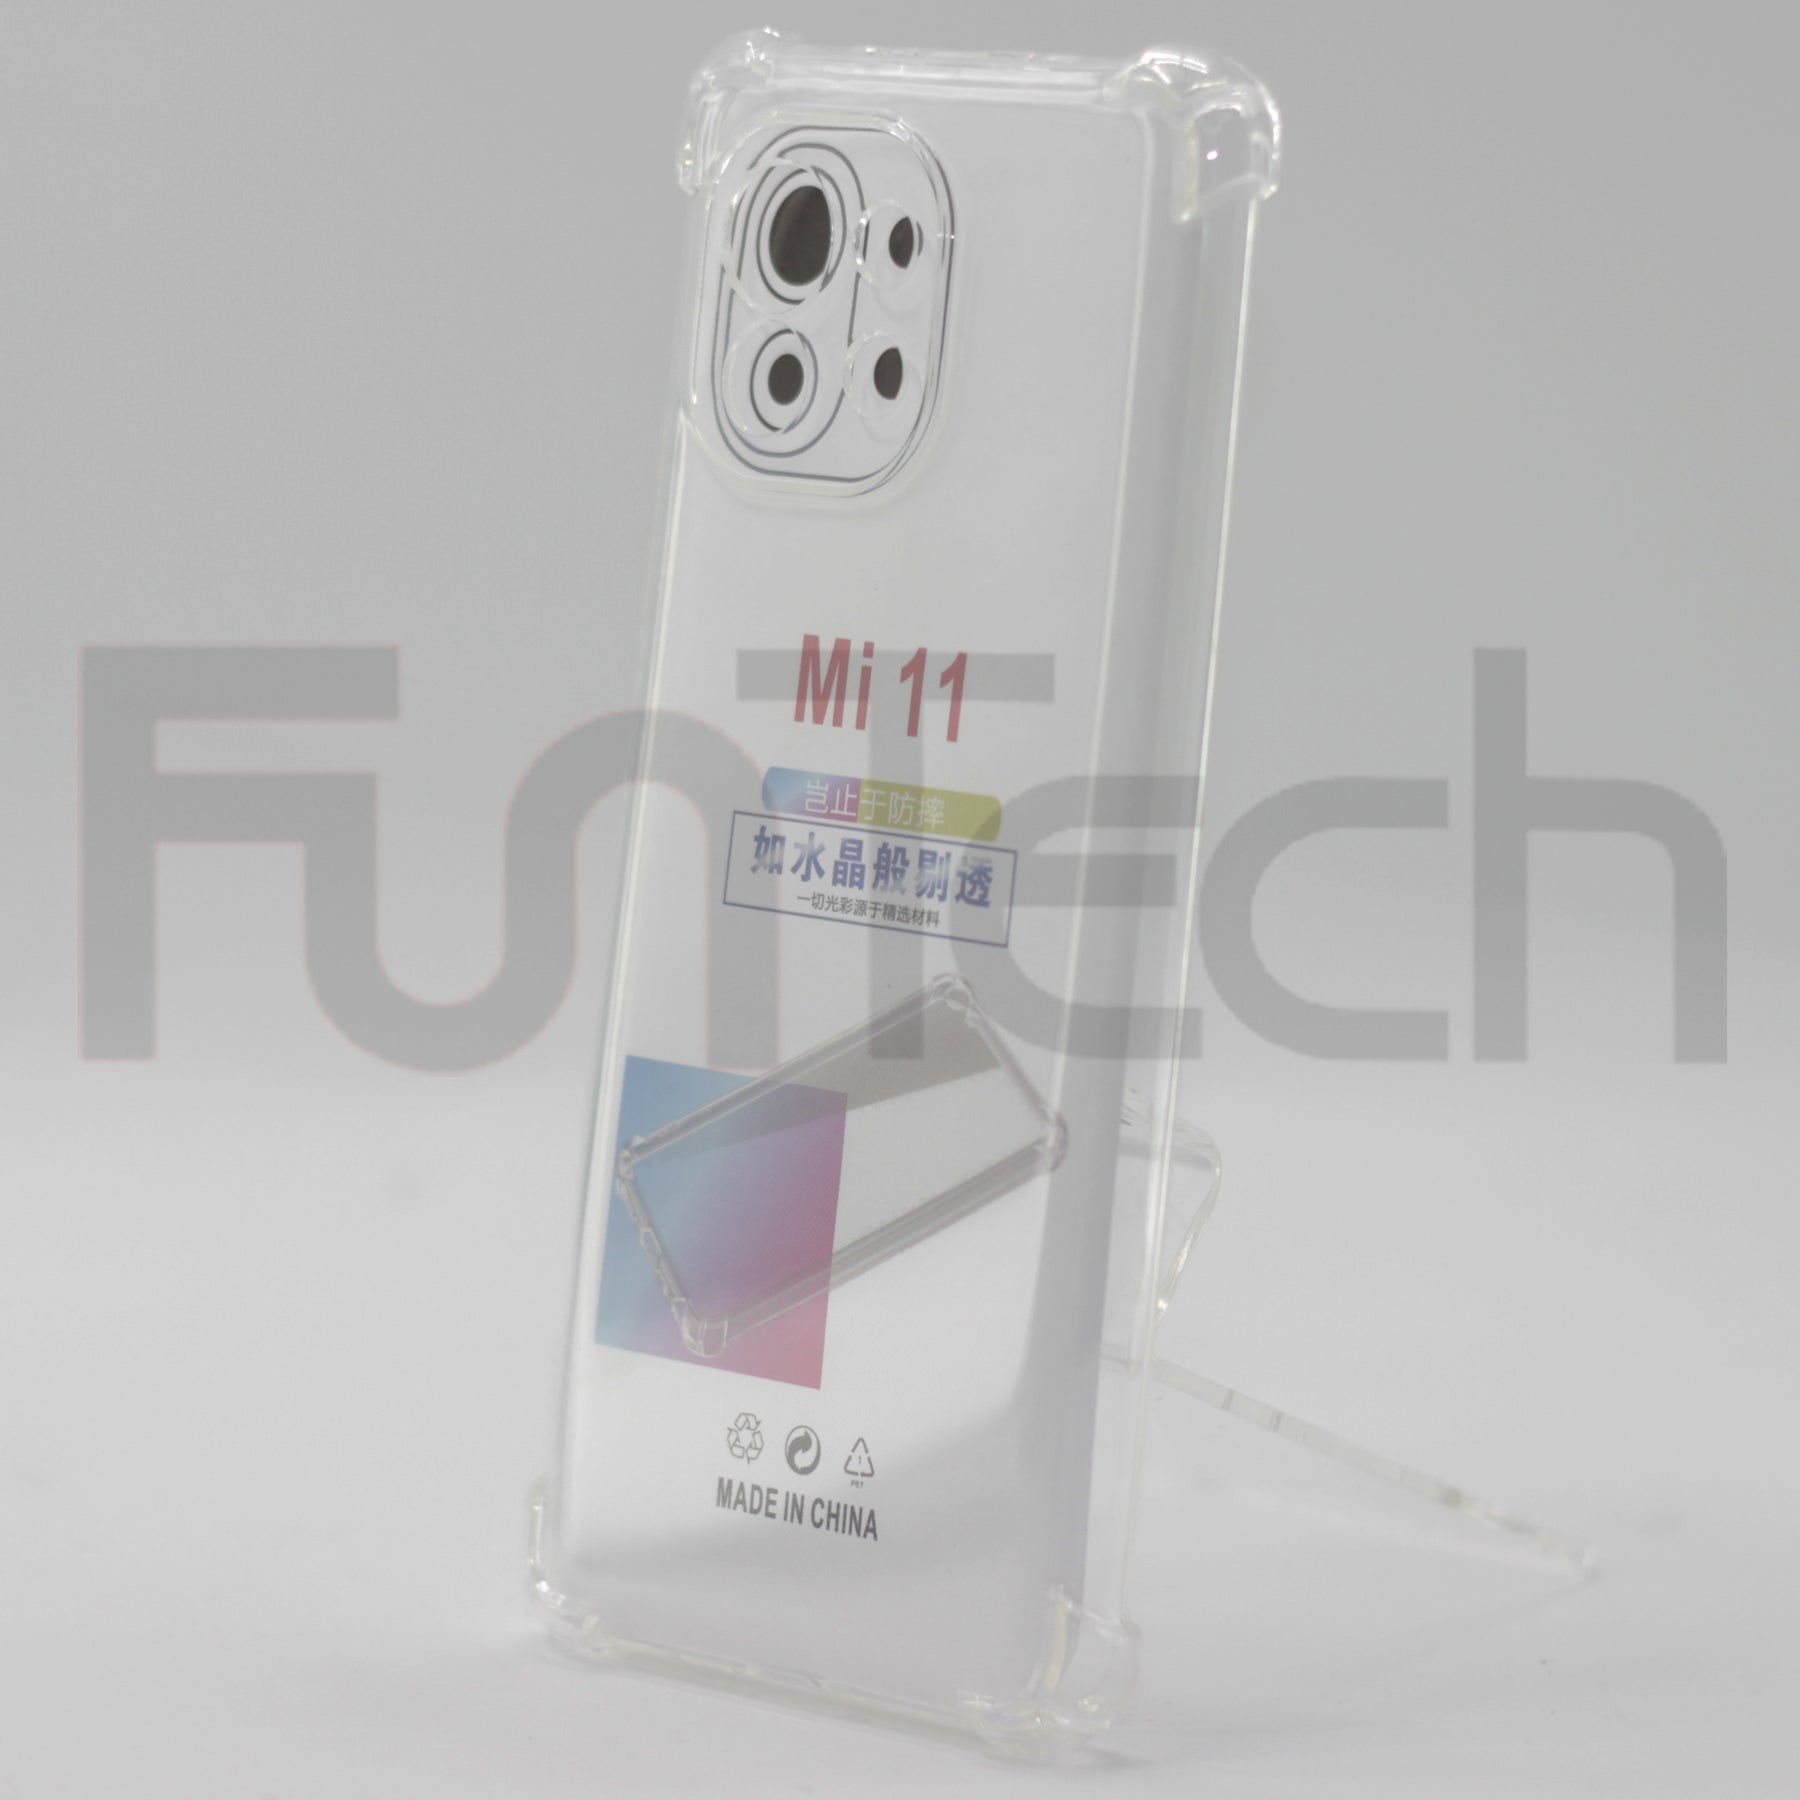 Xiaomi Mi 11, Protective Case, Color Clear